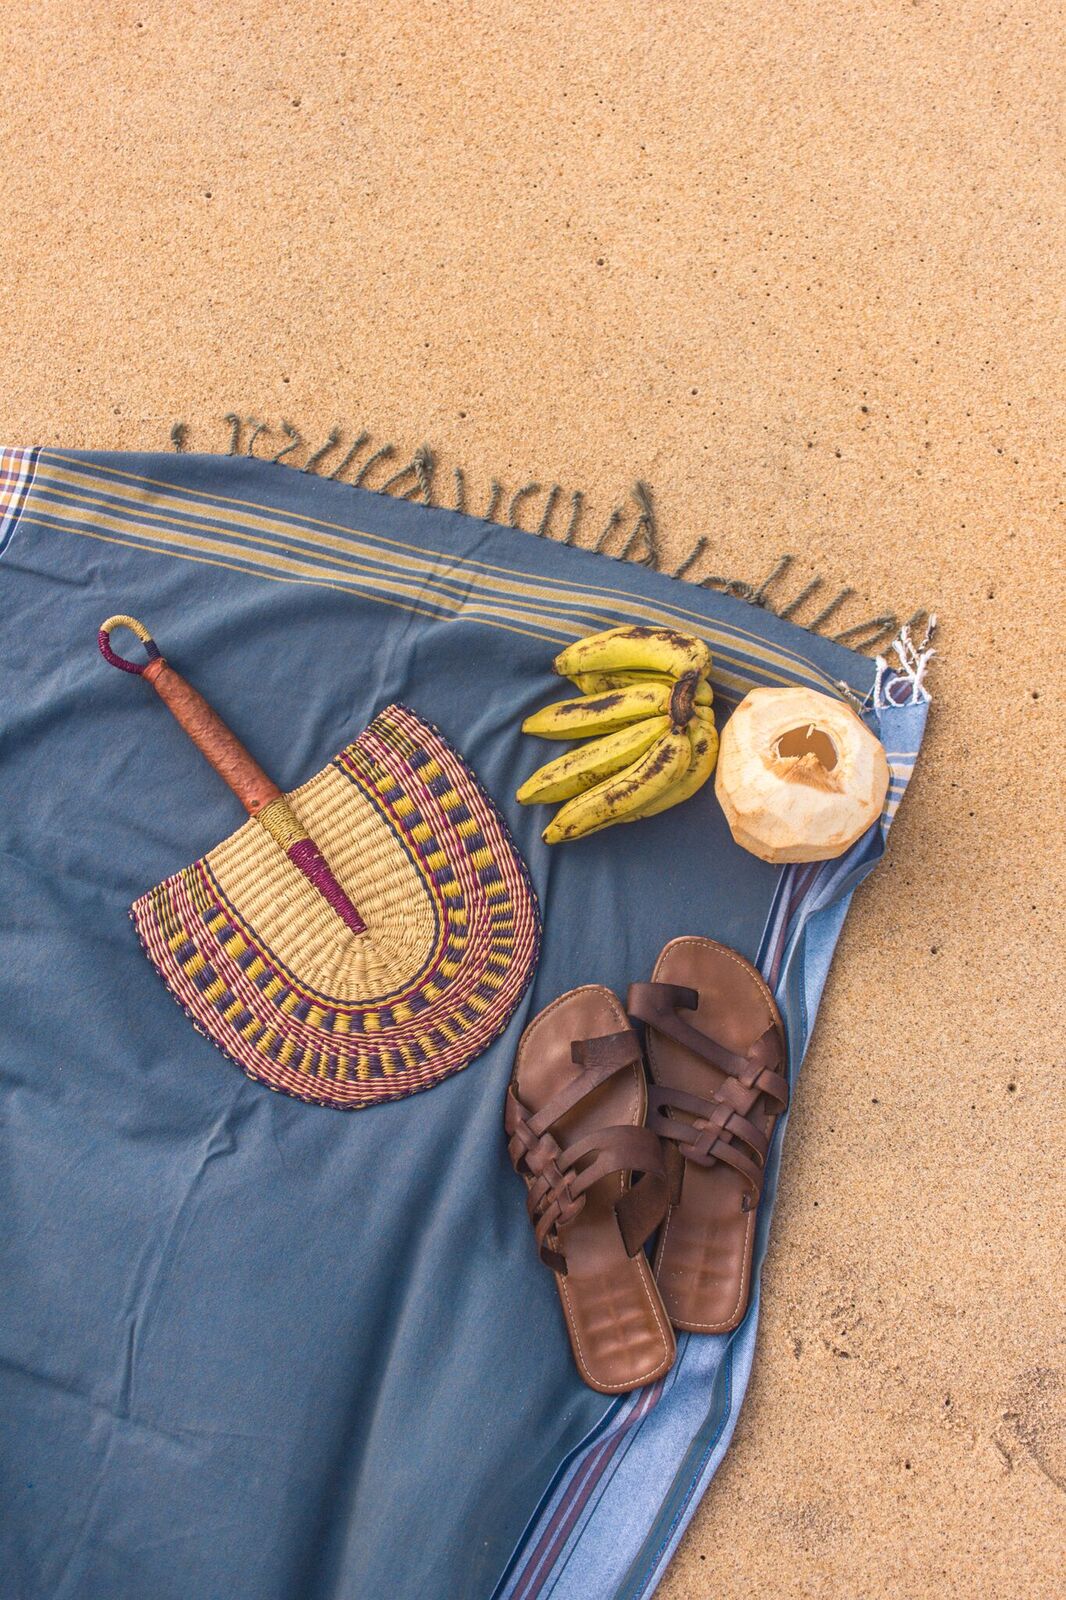 Bananas on beach.jpeg